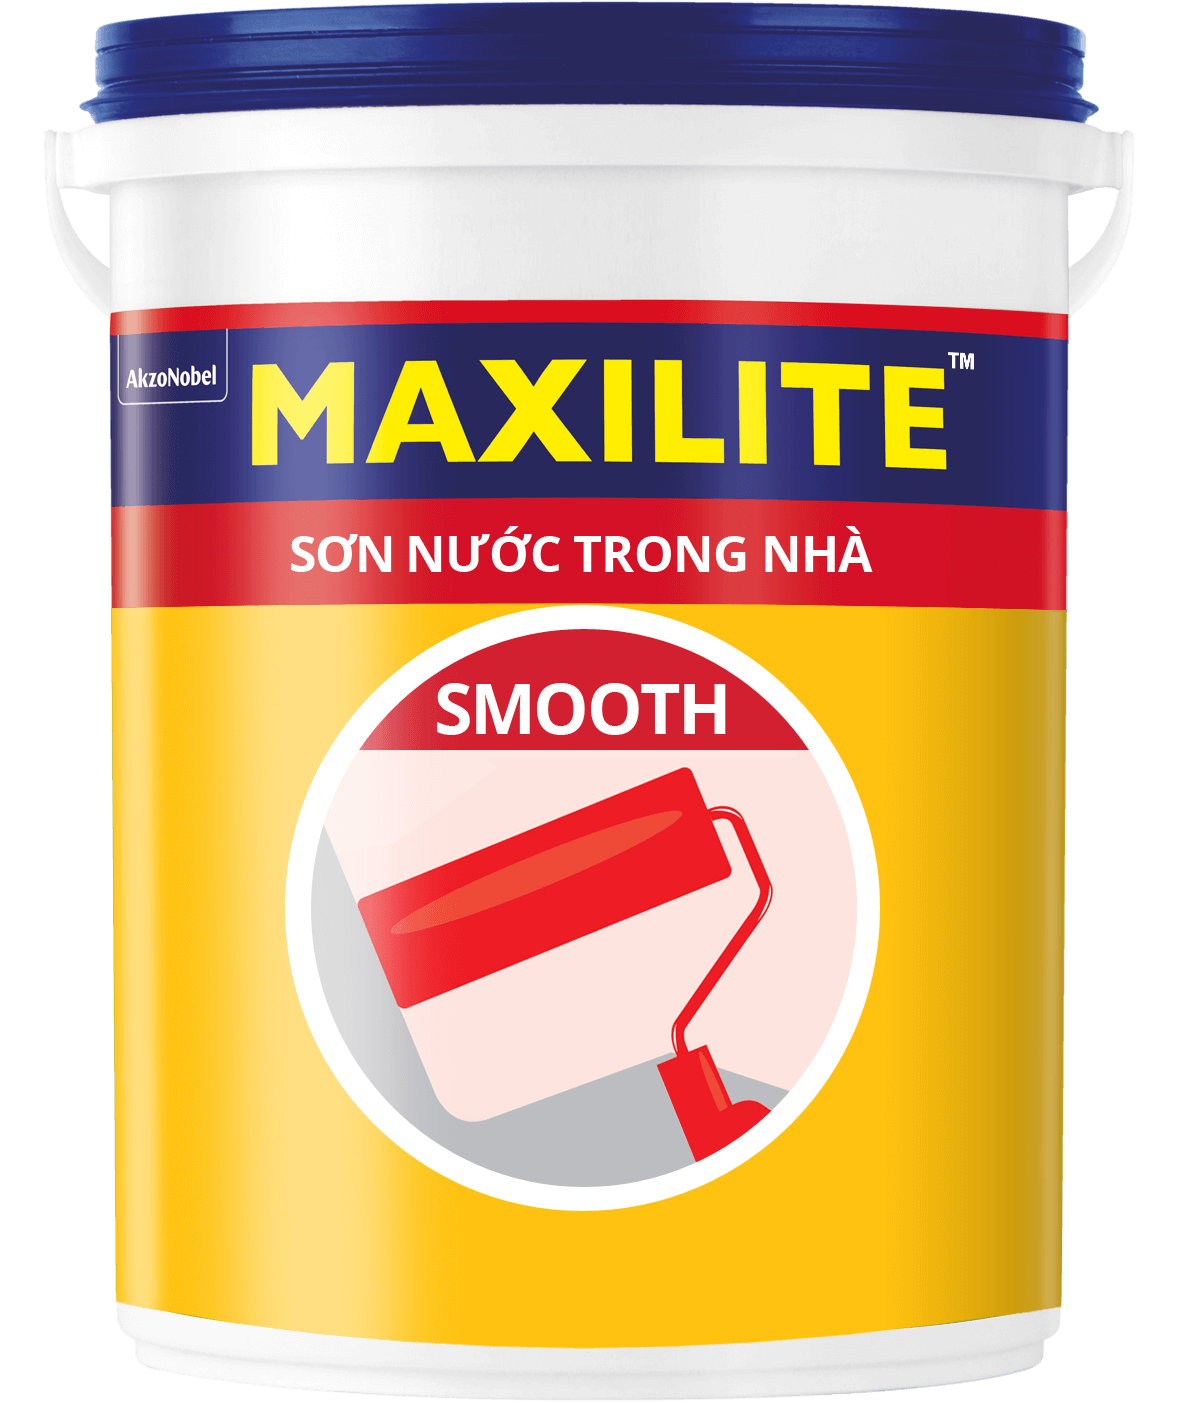 Sơn maxilite smooth